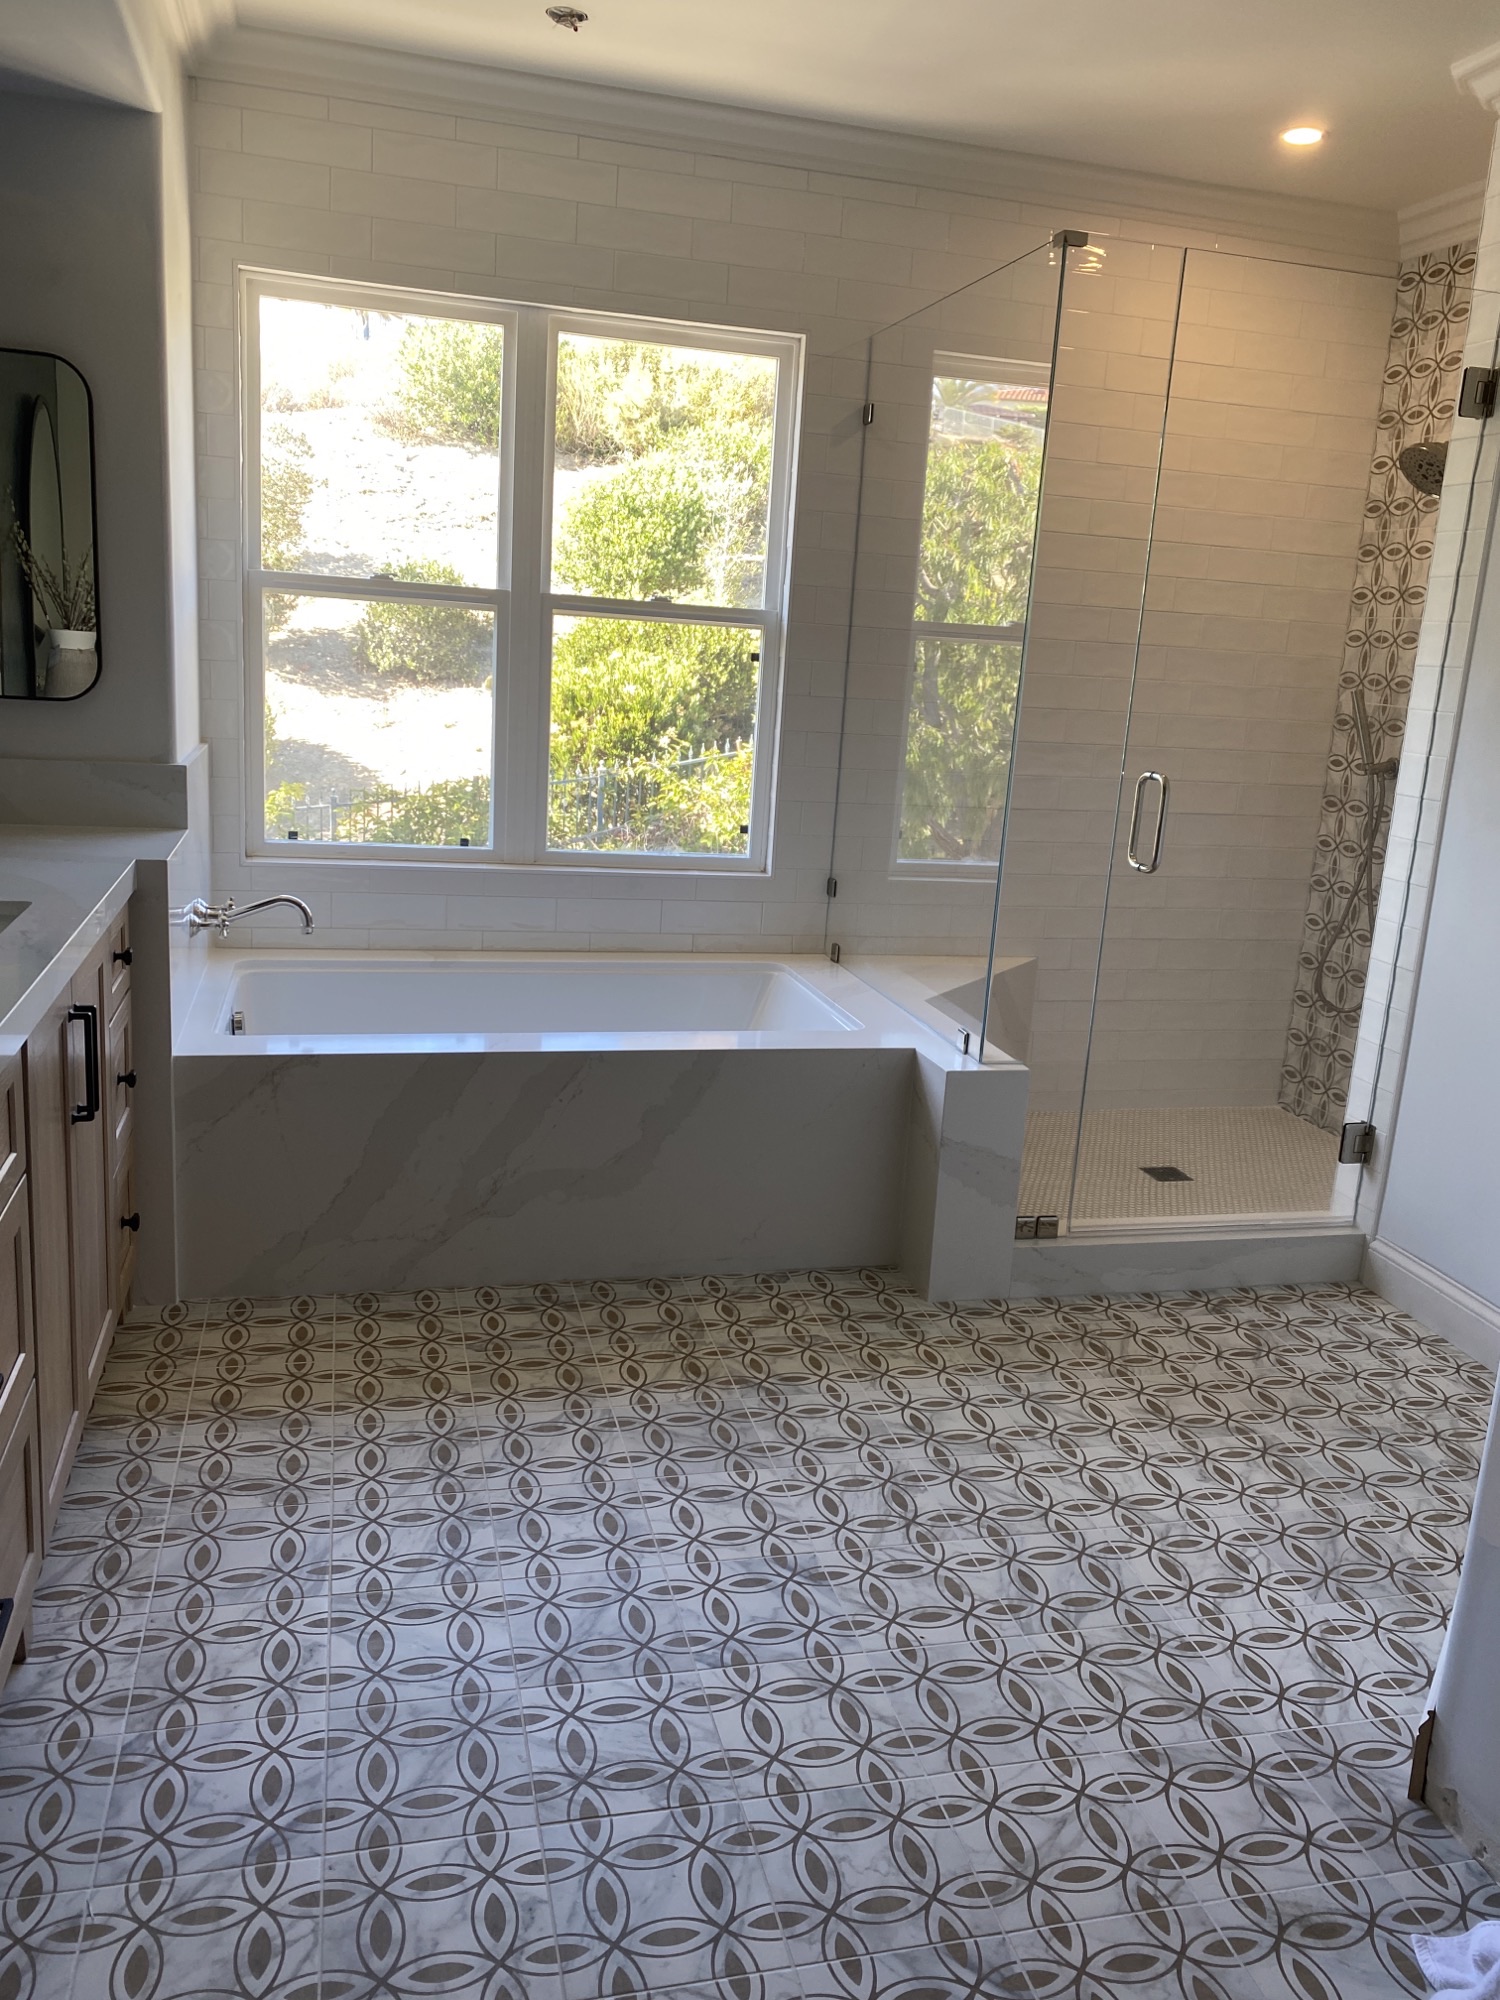 bathroom with decorative tile floor